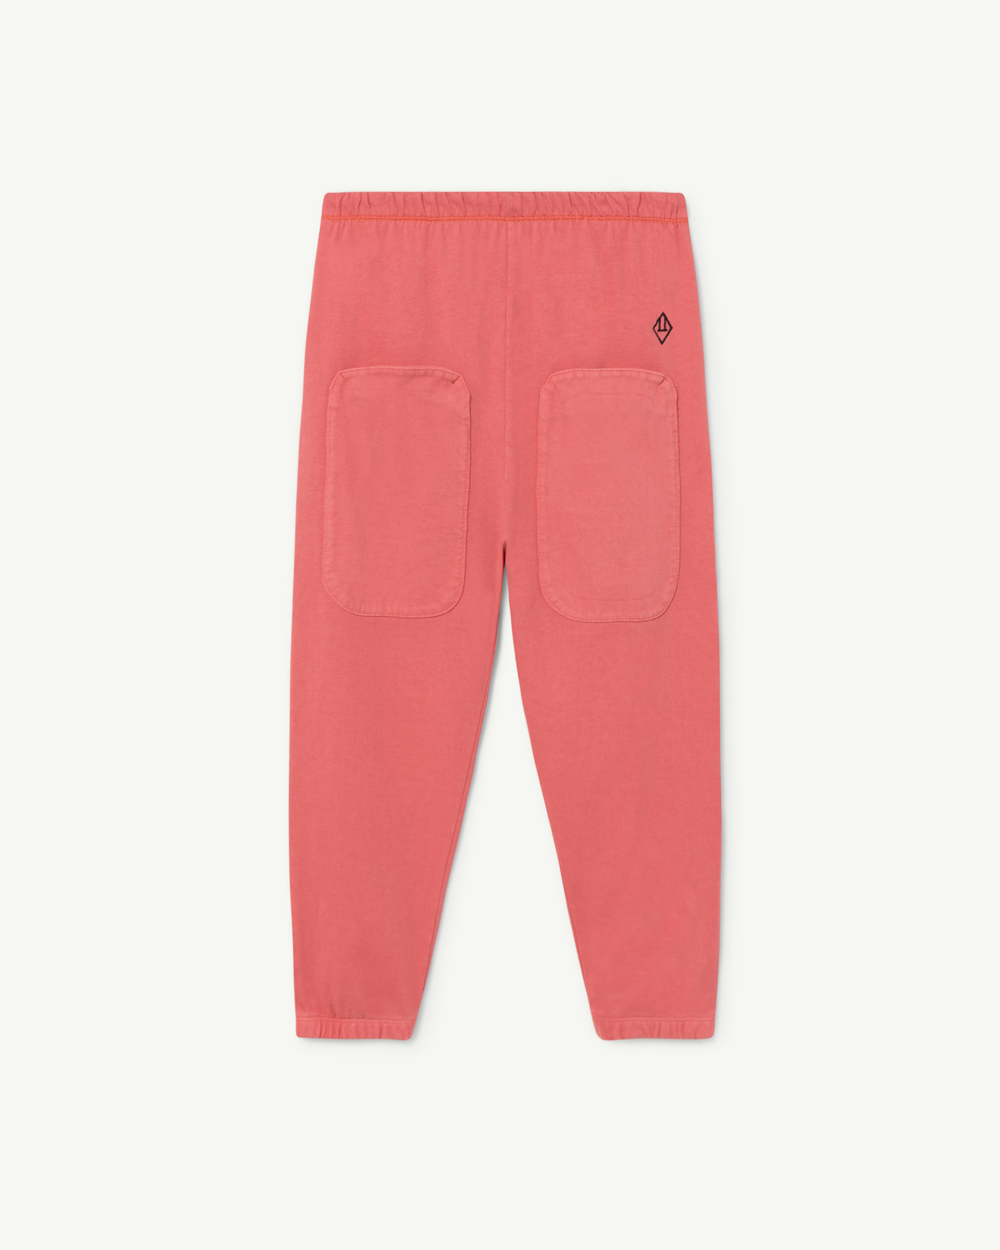 [TAO]F22019-277_CE /EAGLE KIDS PANTS Pink_Logo [10Y]